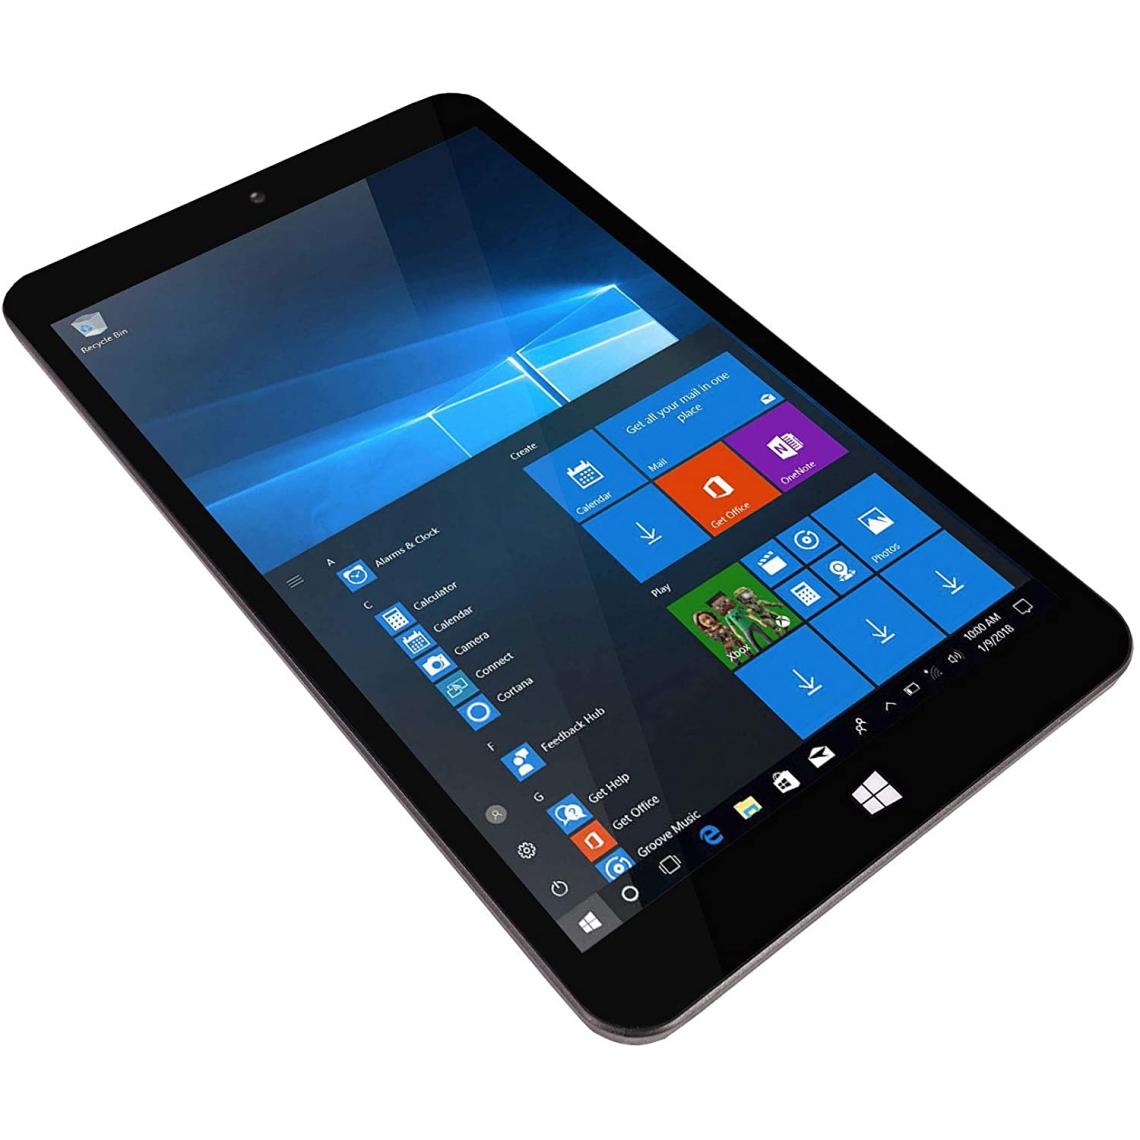 Inconnu - TALIUS, TECH 4 U Tablette Professionnelle Zaphyr 8005W, Ecran 8`` 1920x1200, Intel Quad Core Atom Z8350, 4Go RAM, 64Go ROM, Sortie Micro HDMI, Windows 10, 64 Bits (TAL-ZAPHYR-8005W) - Tablette Windows